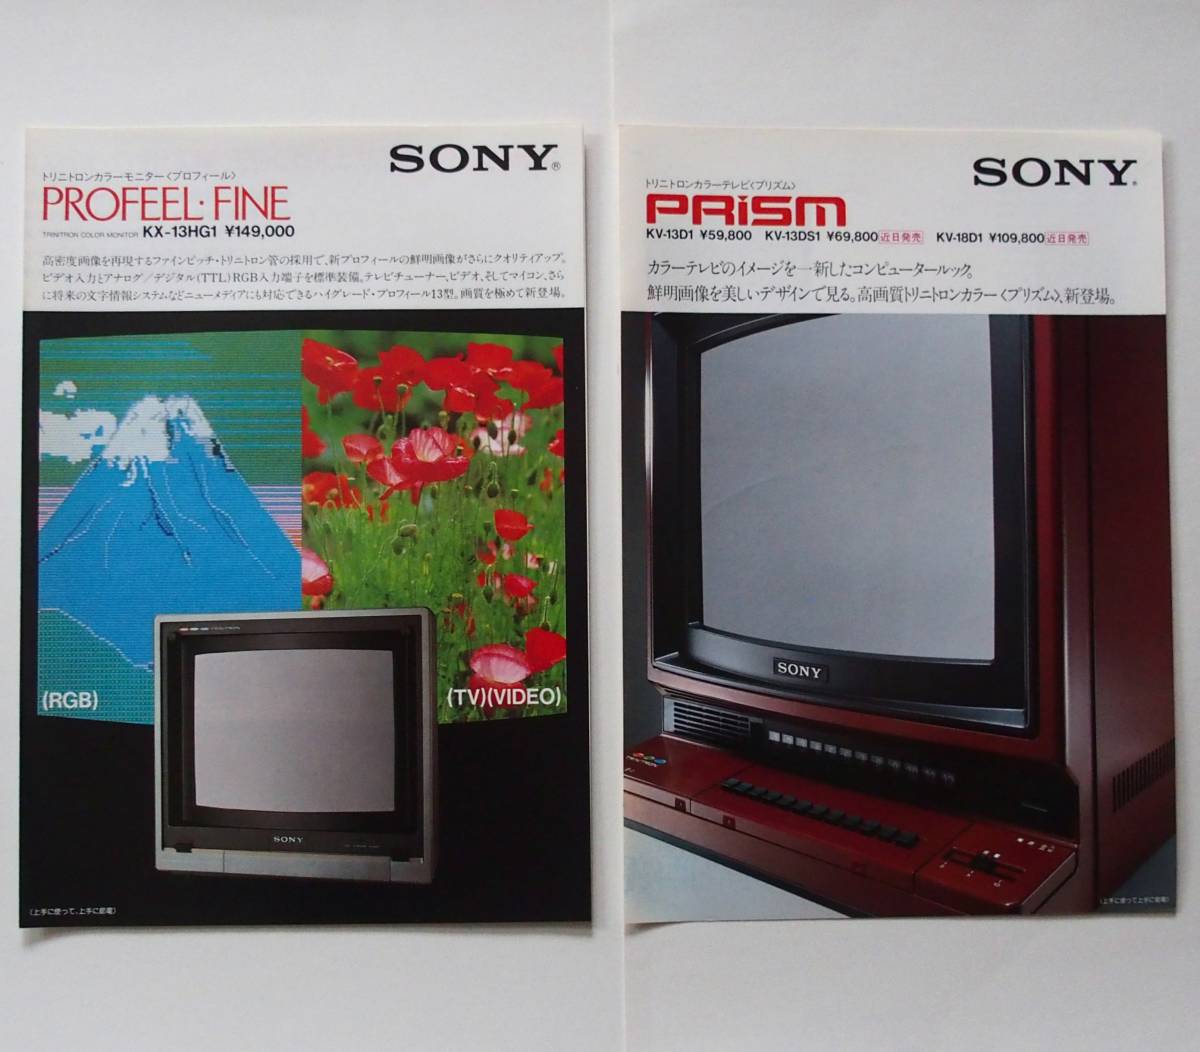 SONY「カラーモニター プロフィール KX-13HG1 カタログ」 /「カラーテレビ プリズム PRISM カタログ」（1982年9月 ）【カタログ2部セット】_画像1